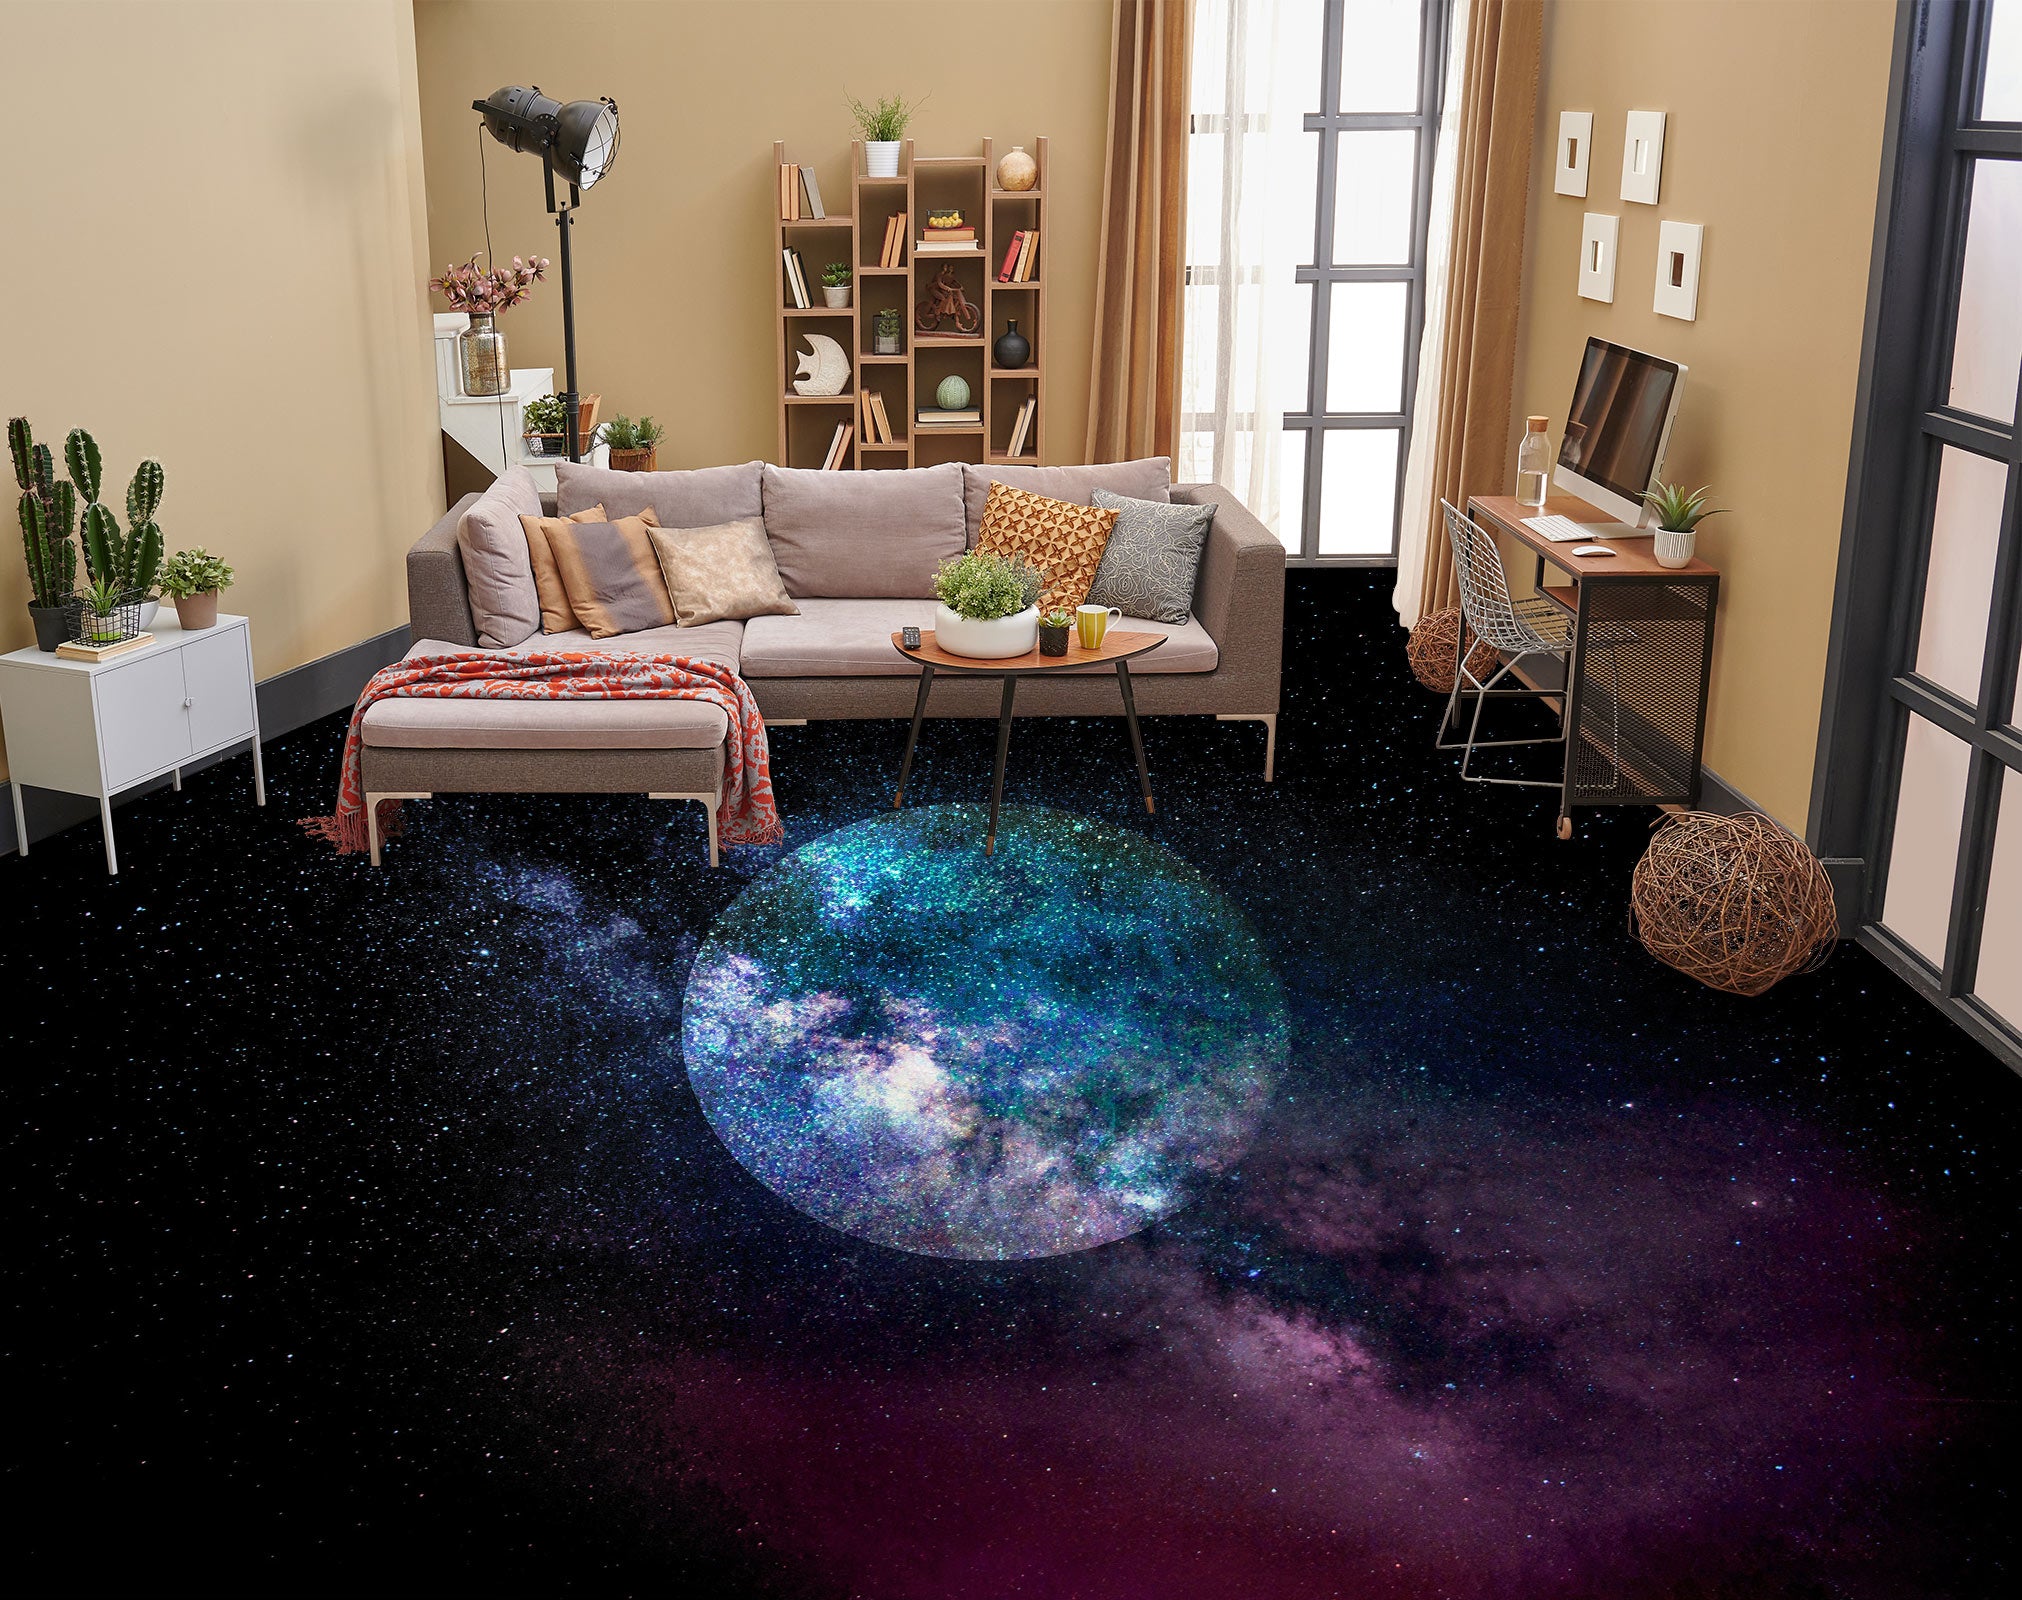 3D Starry Sky Moon 102146 Andrea Haase Floor Mural  Wallpaper Murals Self-Adhesive Removable Print Epoxy